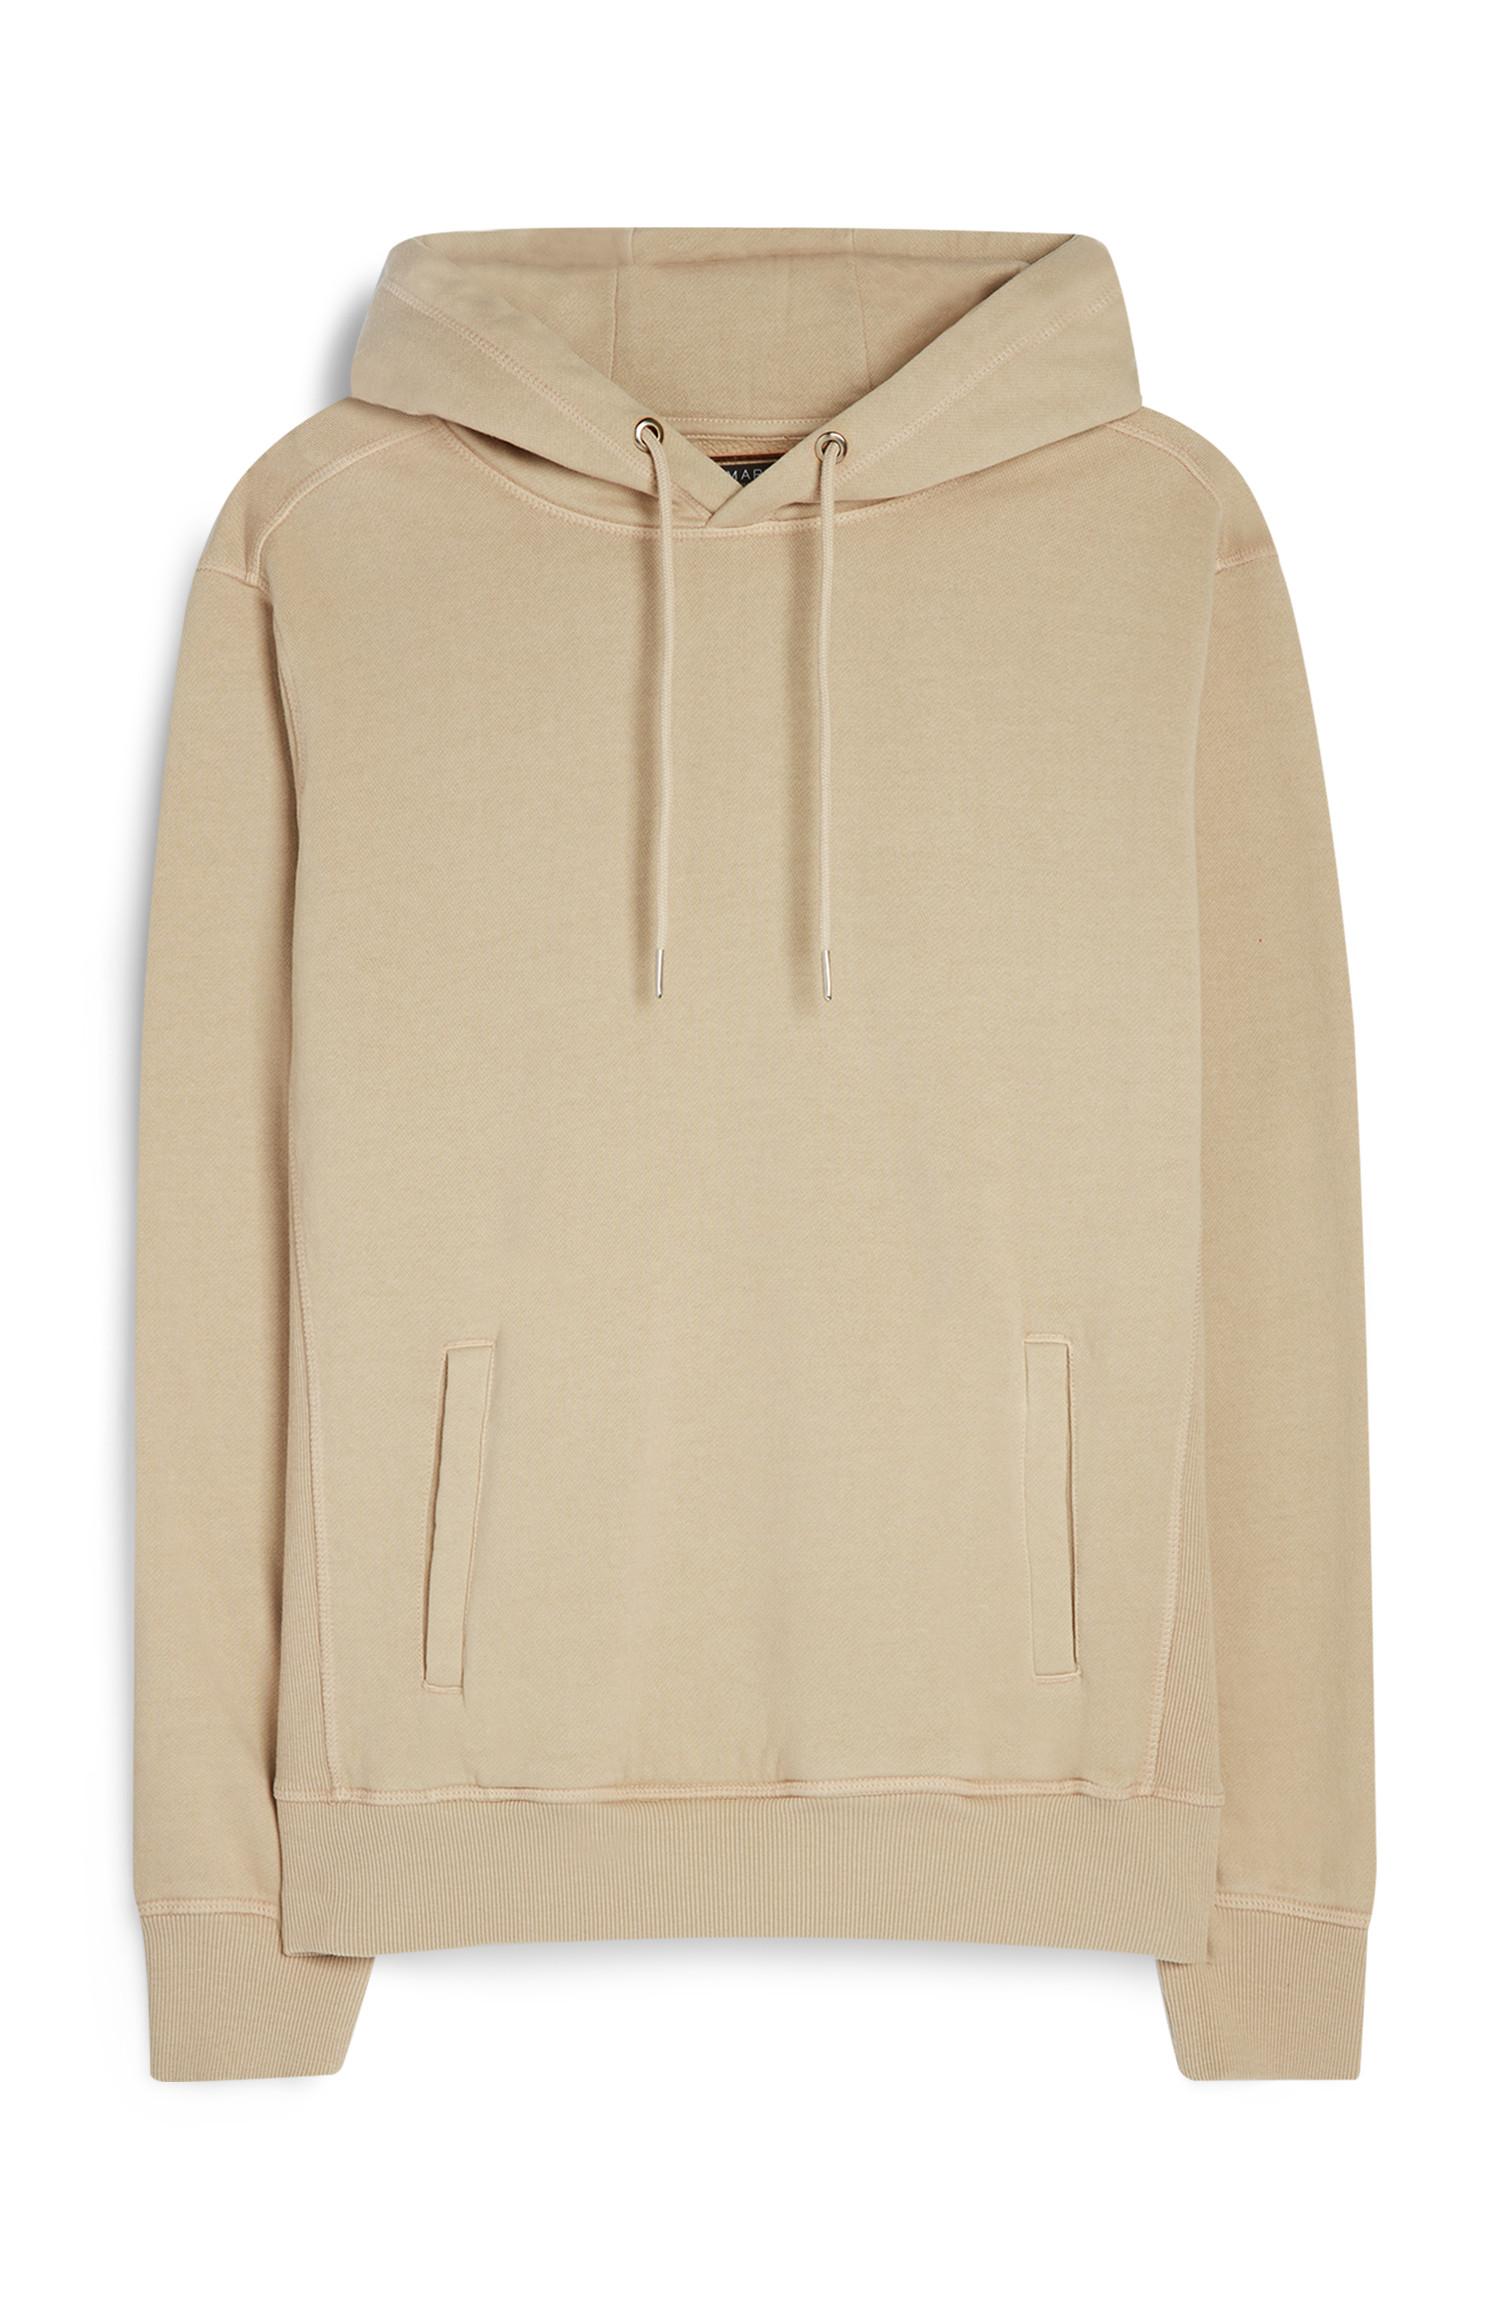 the zipper hoodie